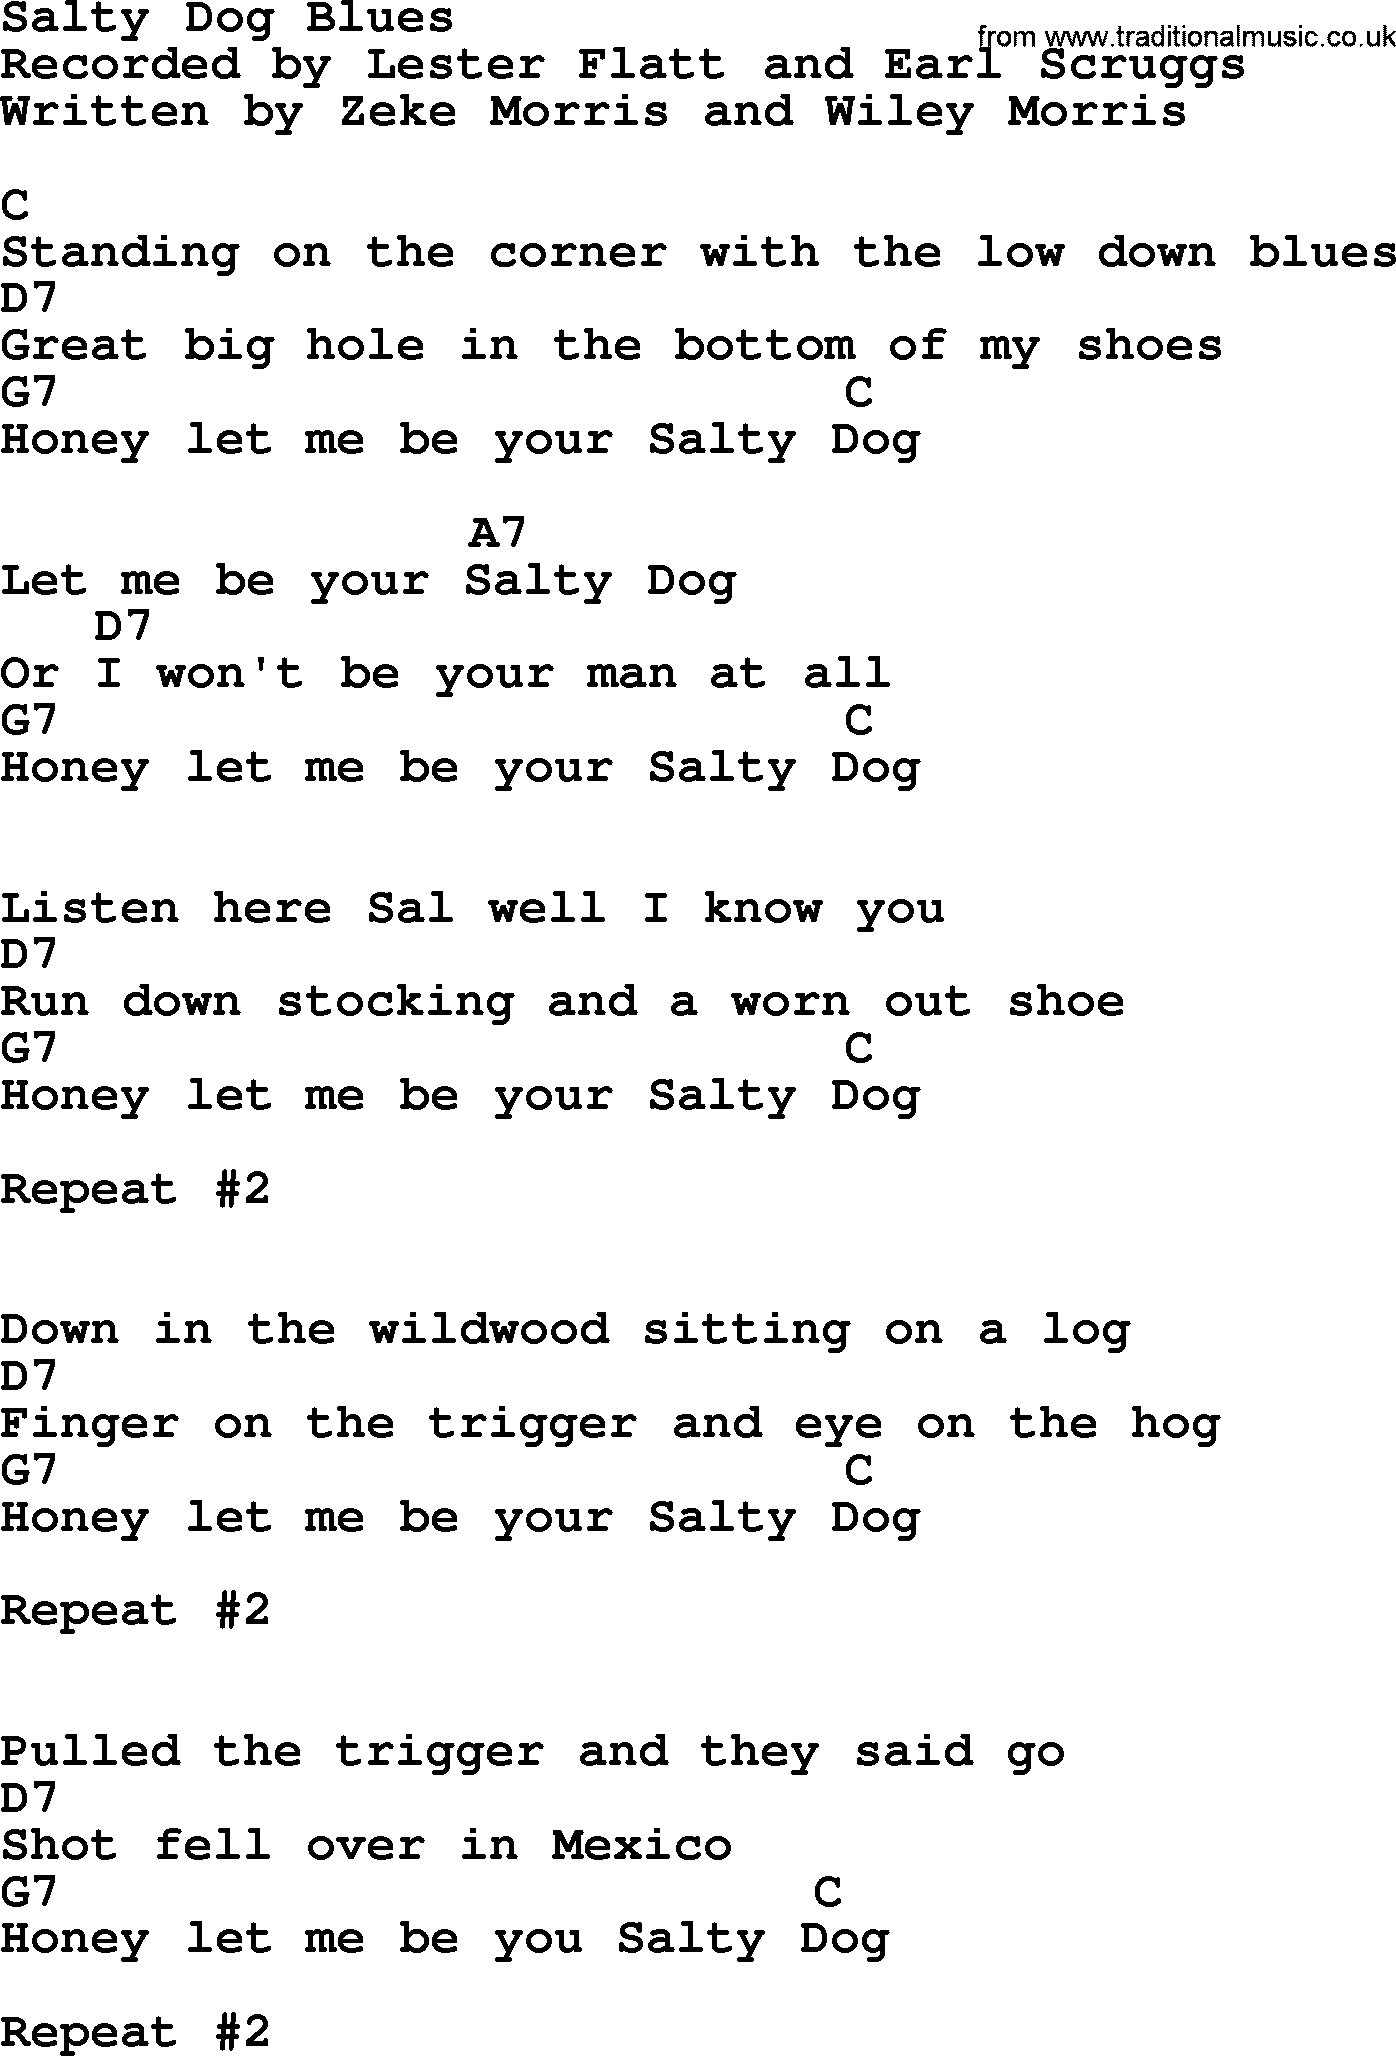 Bluegrass song: Salty Dog Blues, lyrics and chords